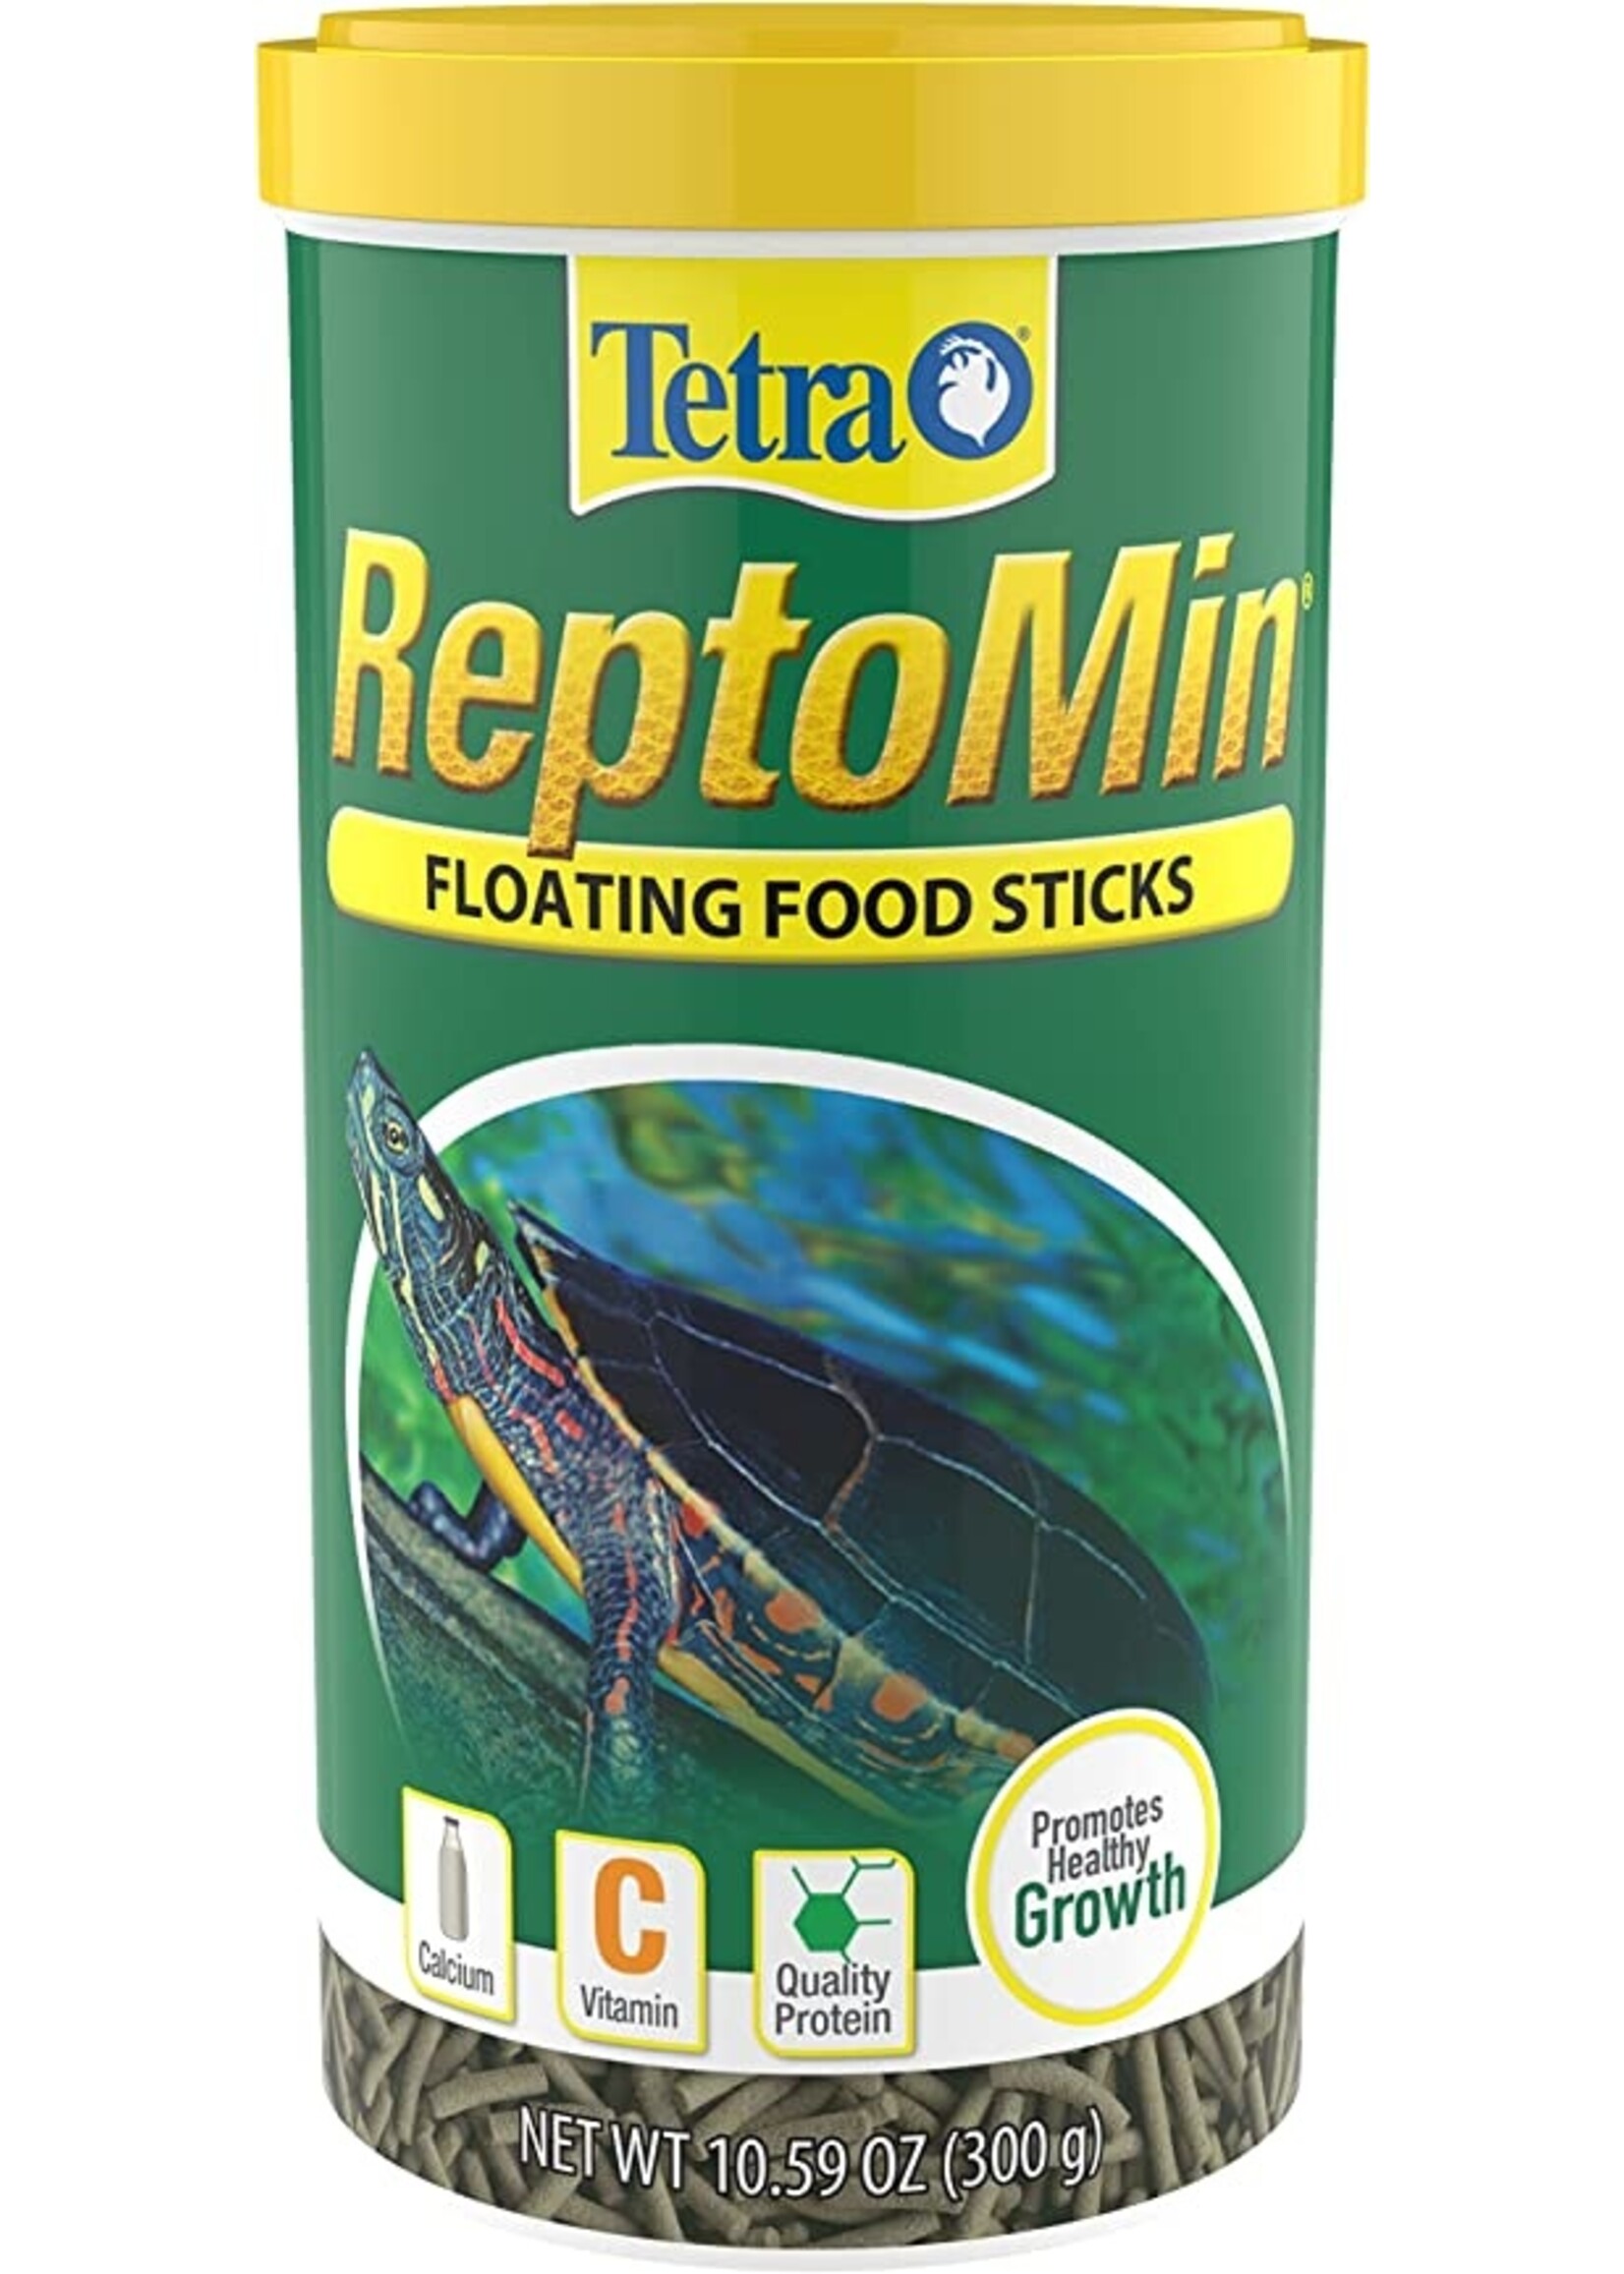 Tetra Tetra ReptoMin Floating Food Sticks